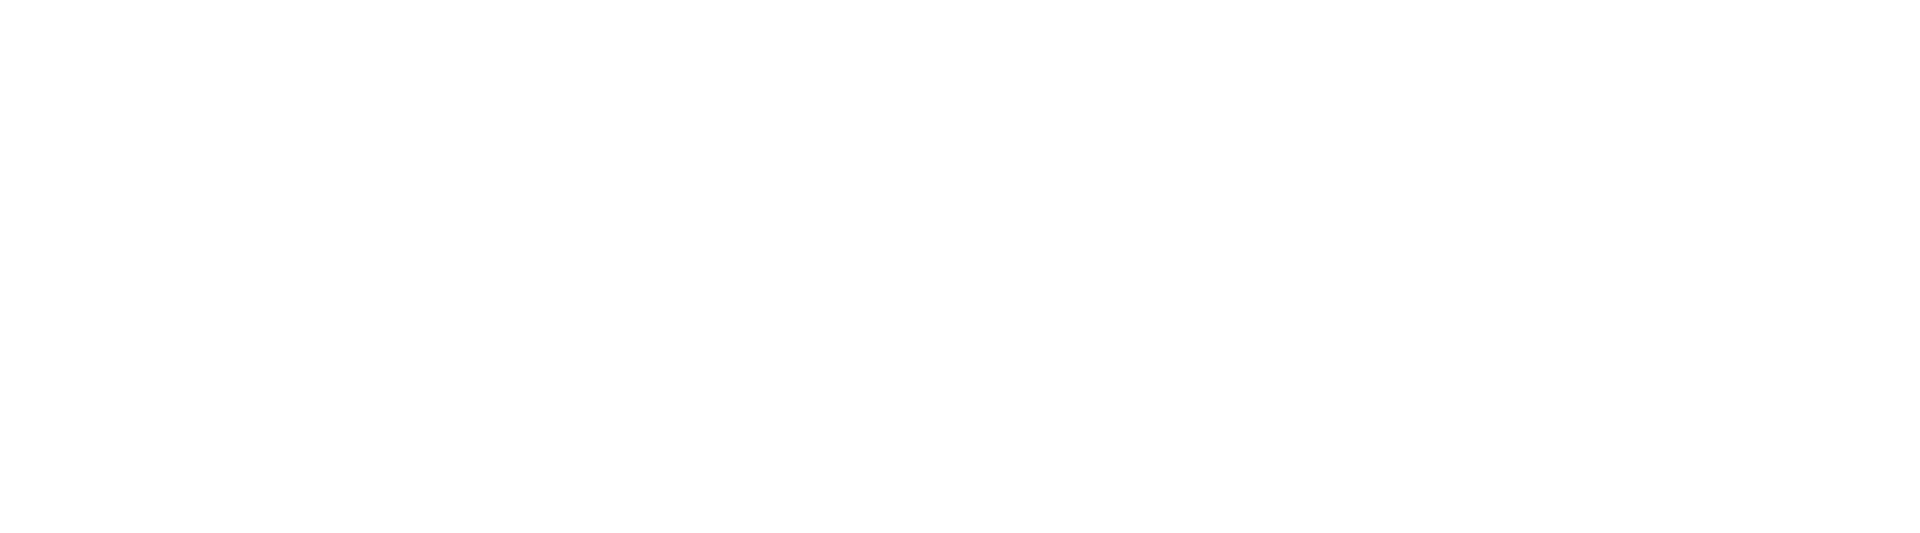 Masters Group logo